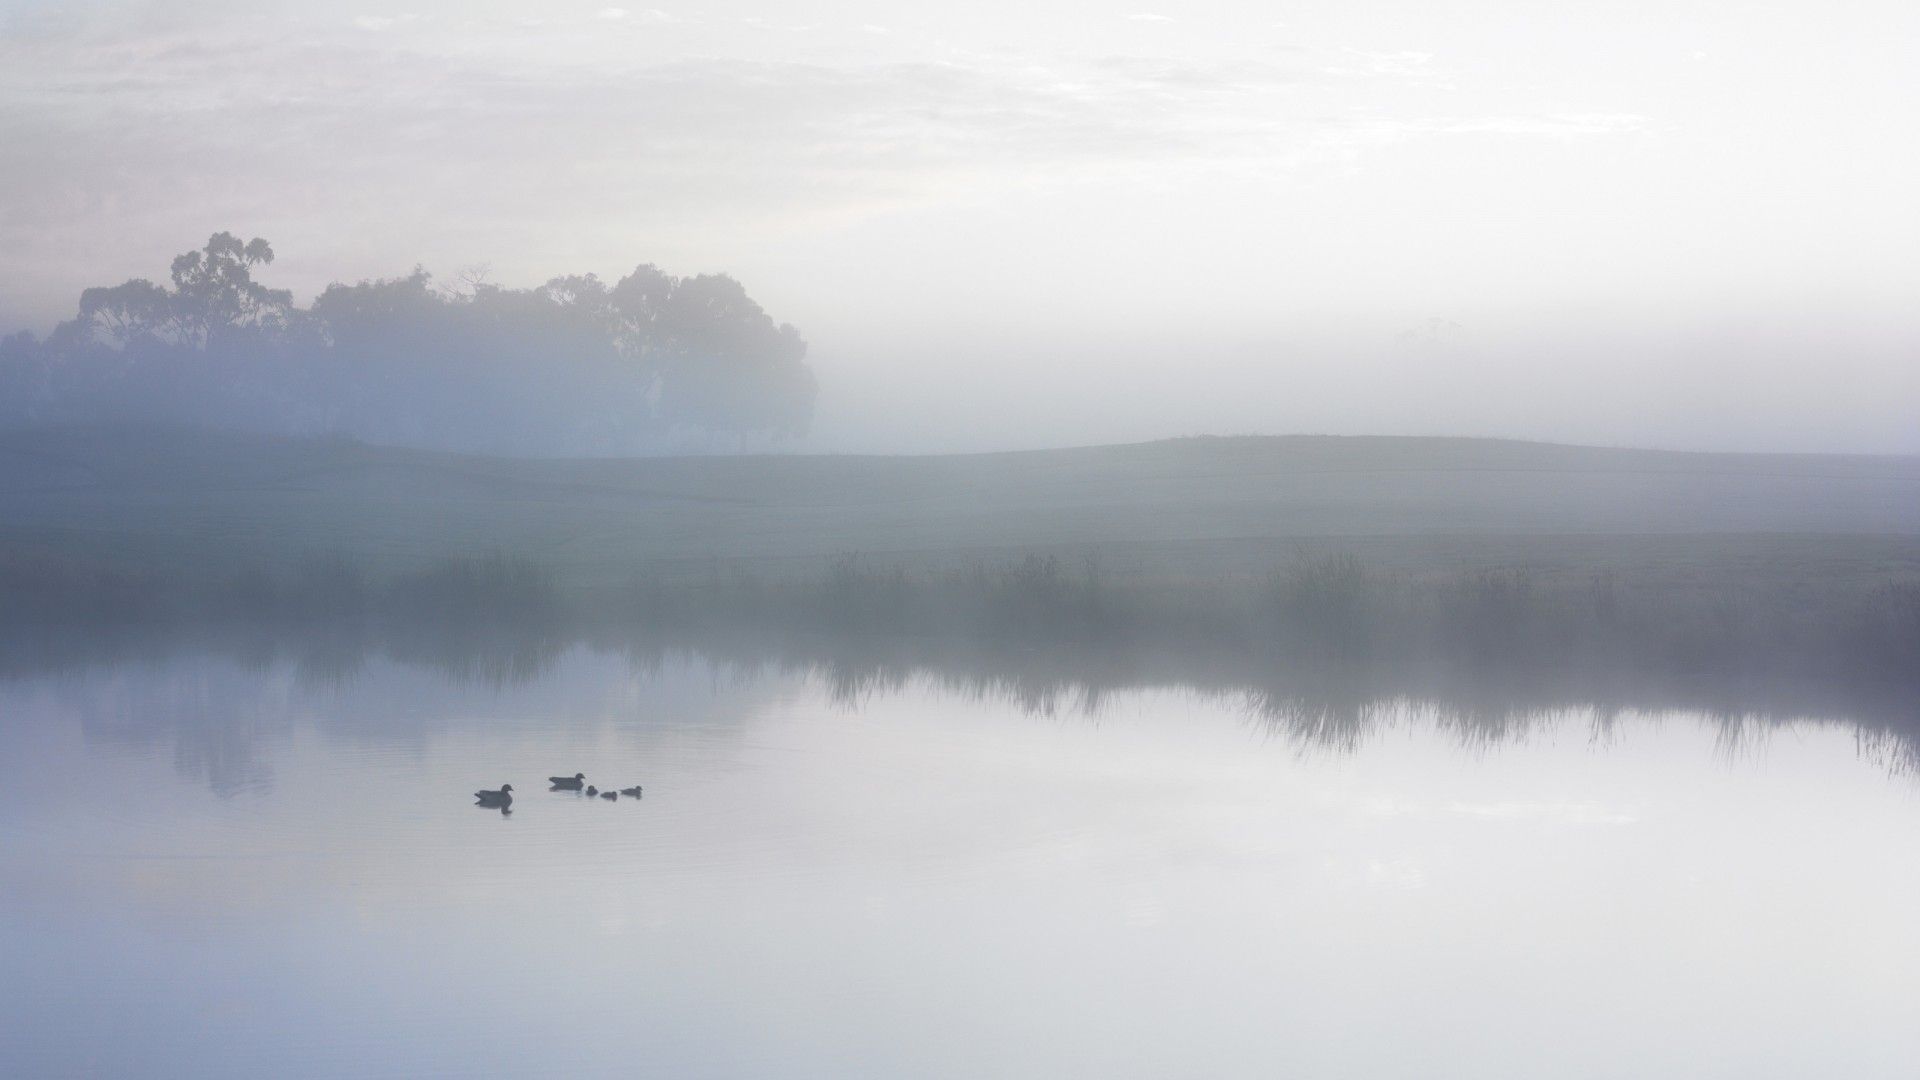 Ducks on a misty pond wallpaper - HD Backgrounds